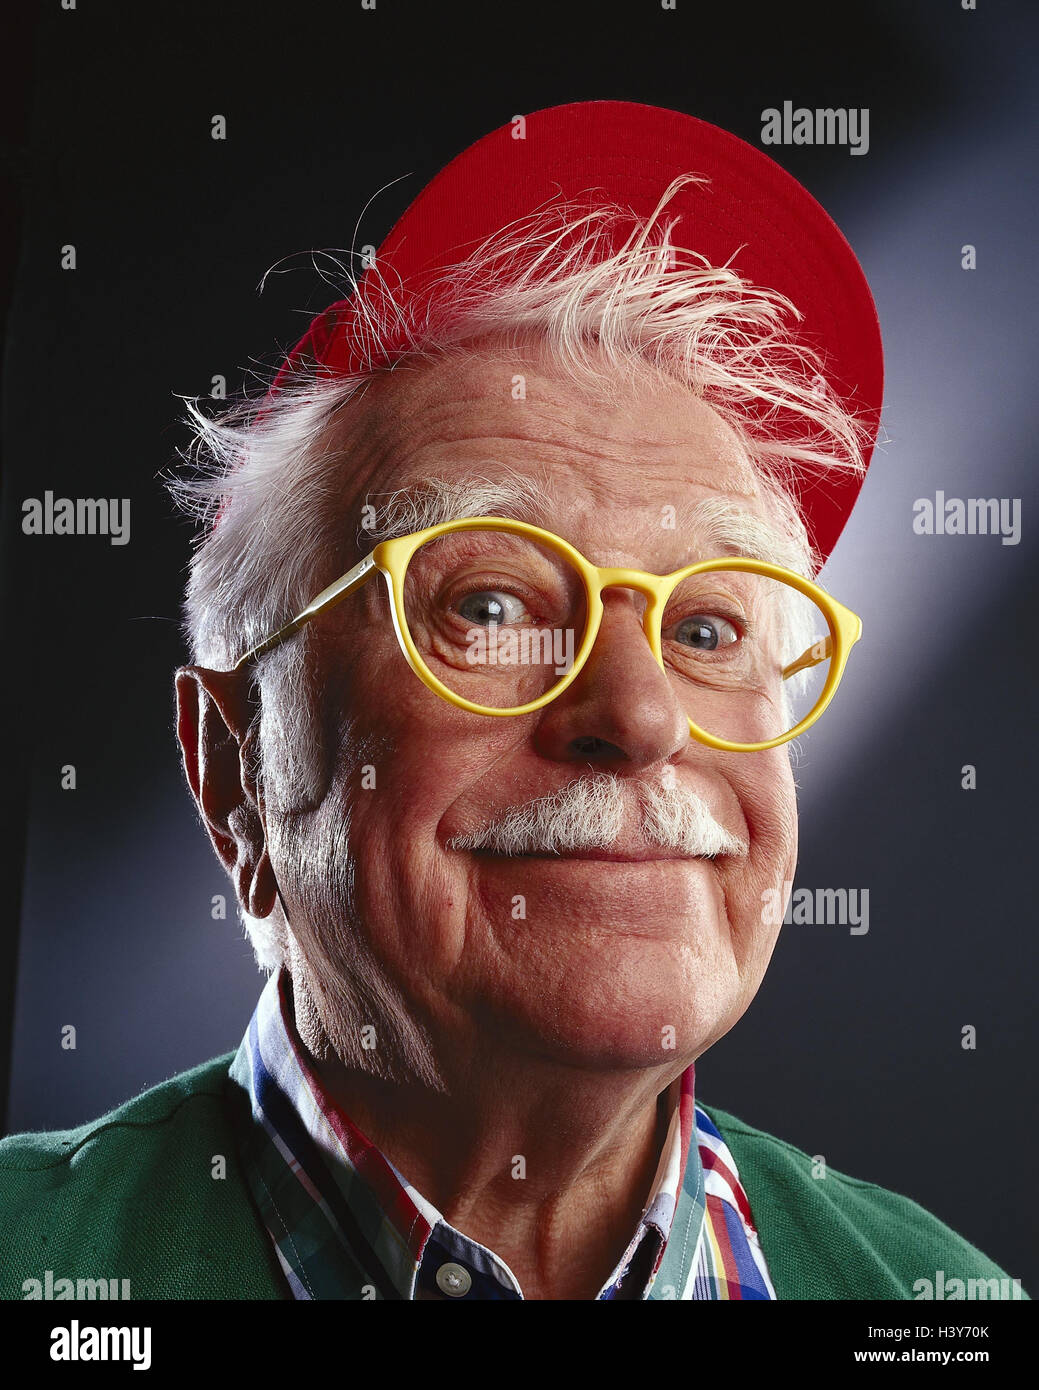 Moustache portrait hi-res stock photography and images - Alamy